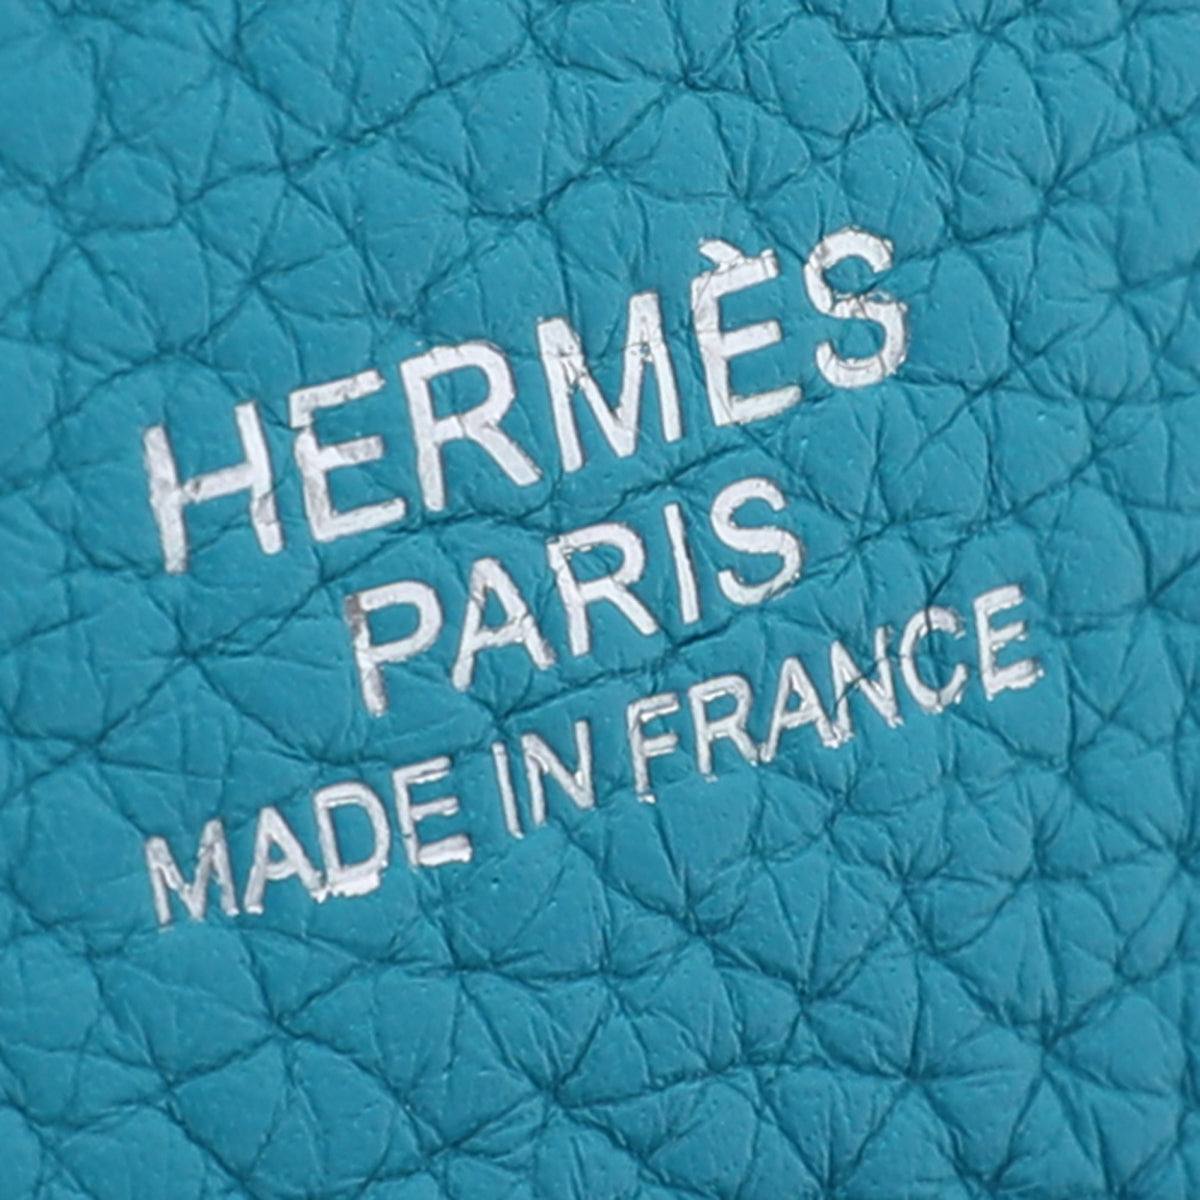 Hermes Turquoise Togo Evelyne III Bag